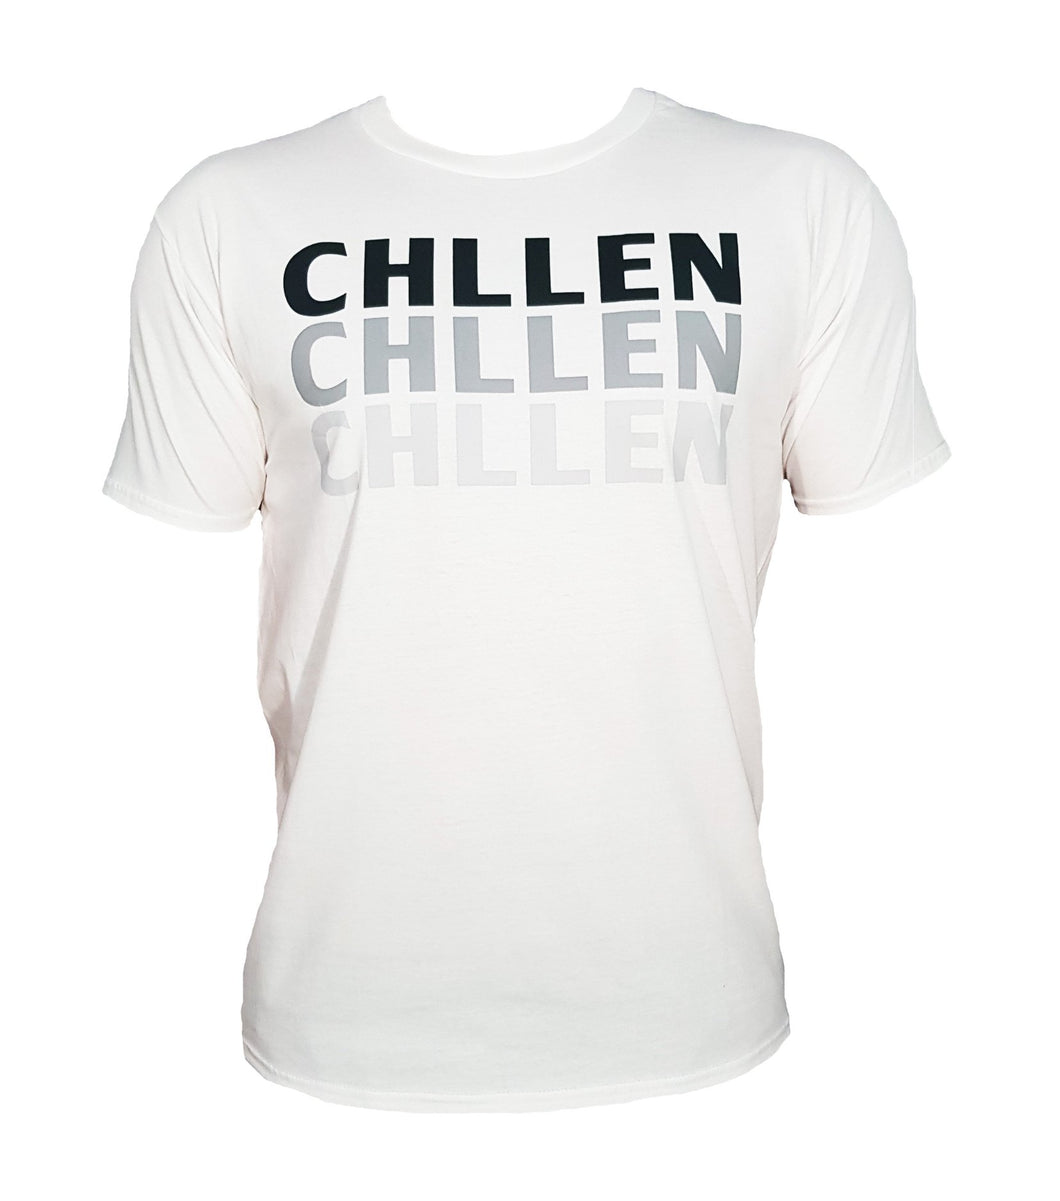 chillen chllen lifestyle wear casual white-grey shirt t-shirt tee